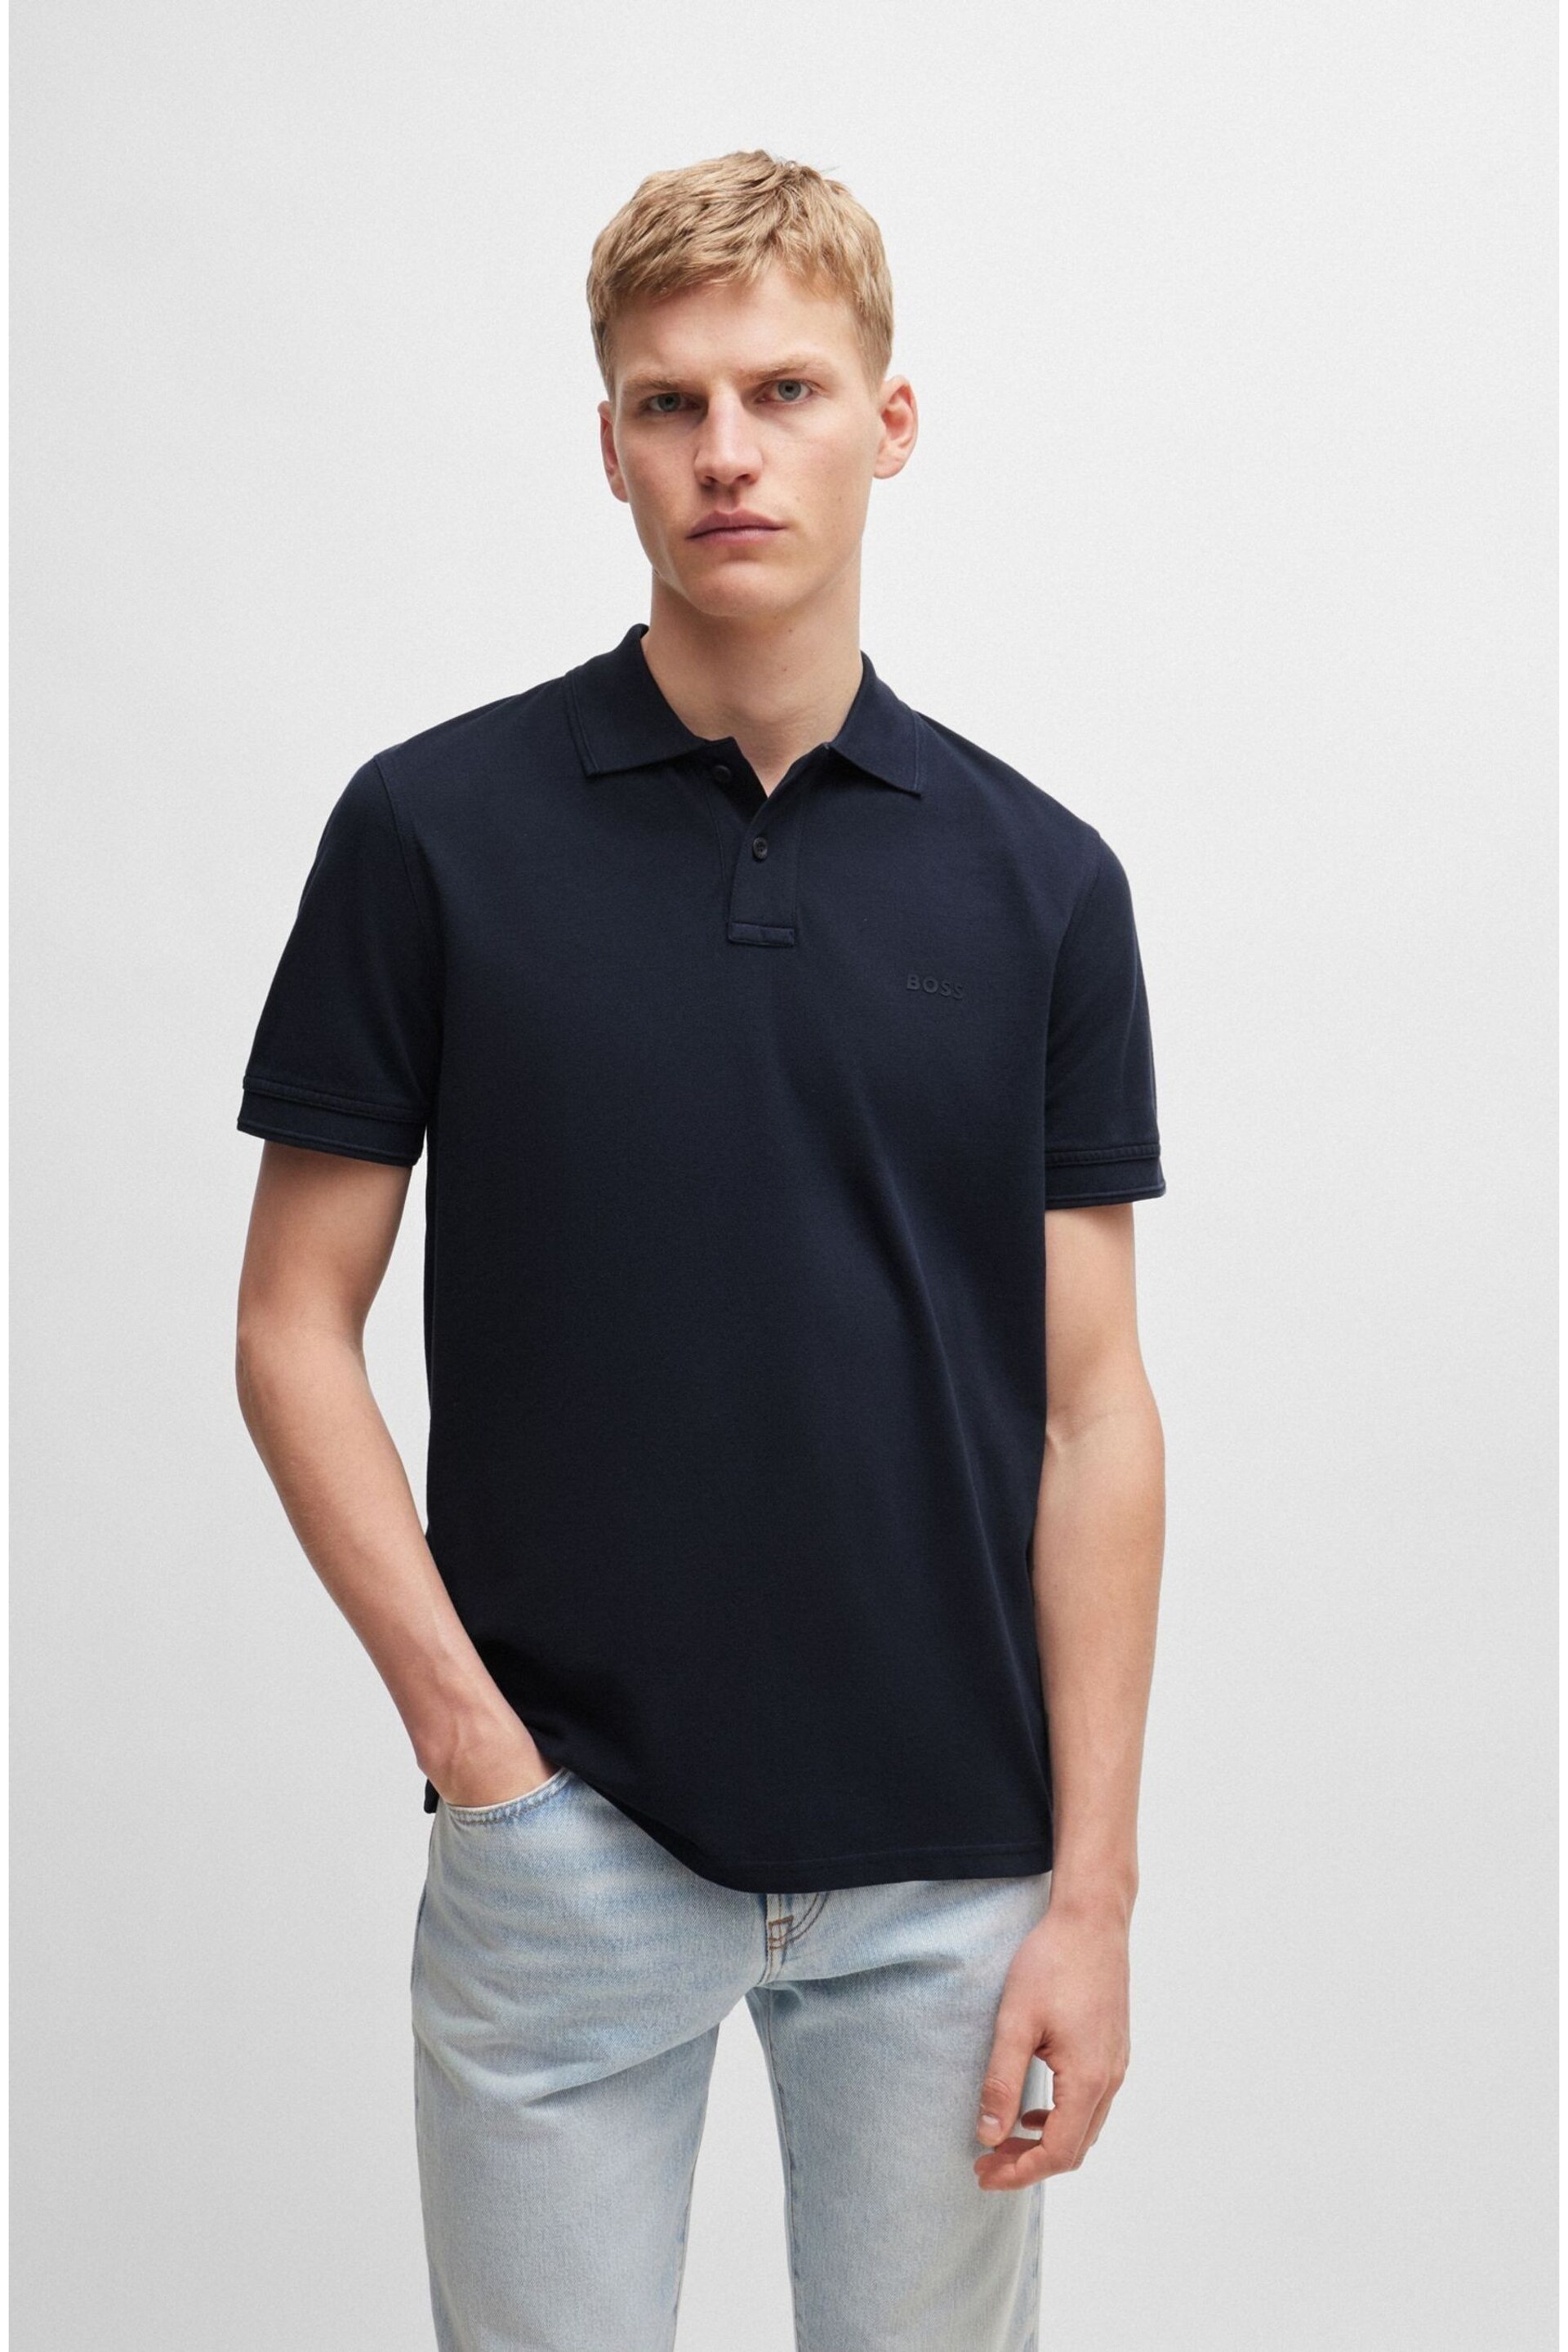 BOSS Blue Cotton Pique Polo Shirt - Image 1 of 5